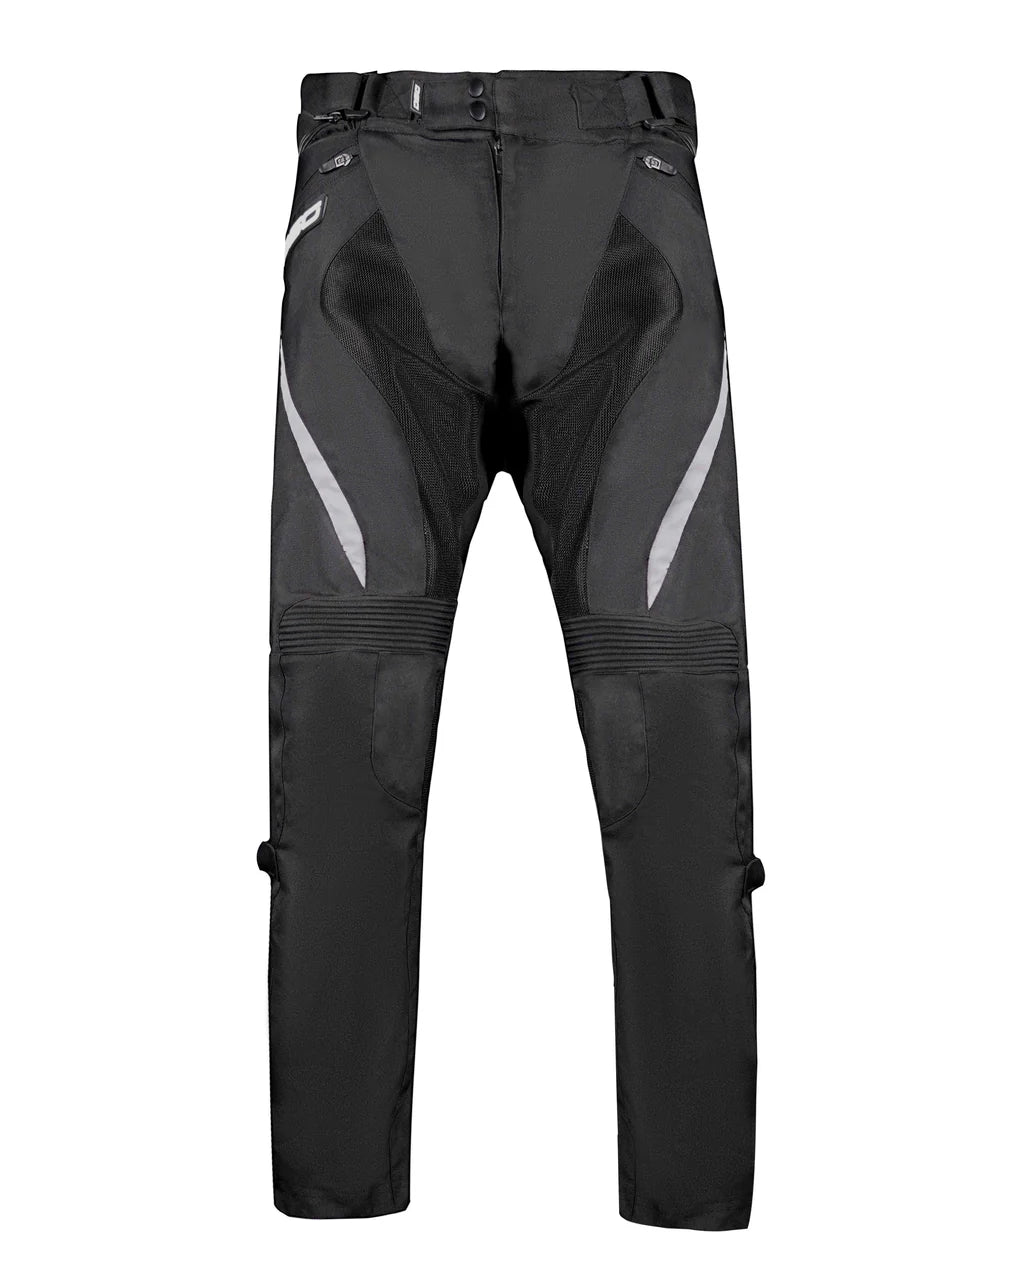 IXS Classic Gore-Tex women's textile motorcycle pants | Tenkateshop.com